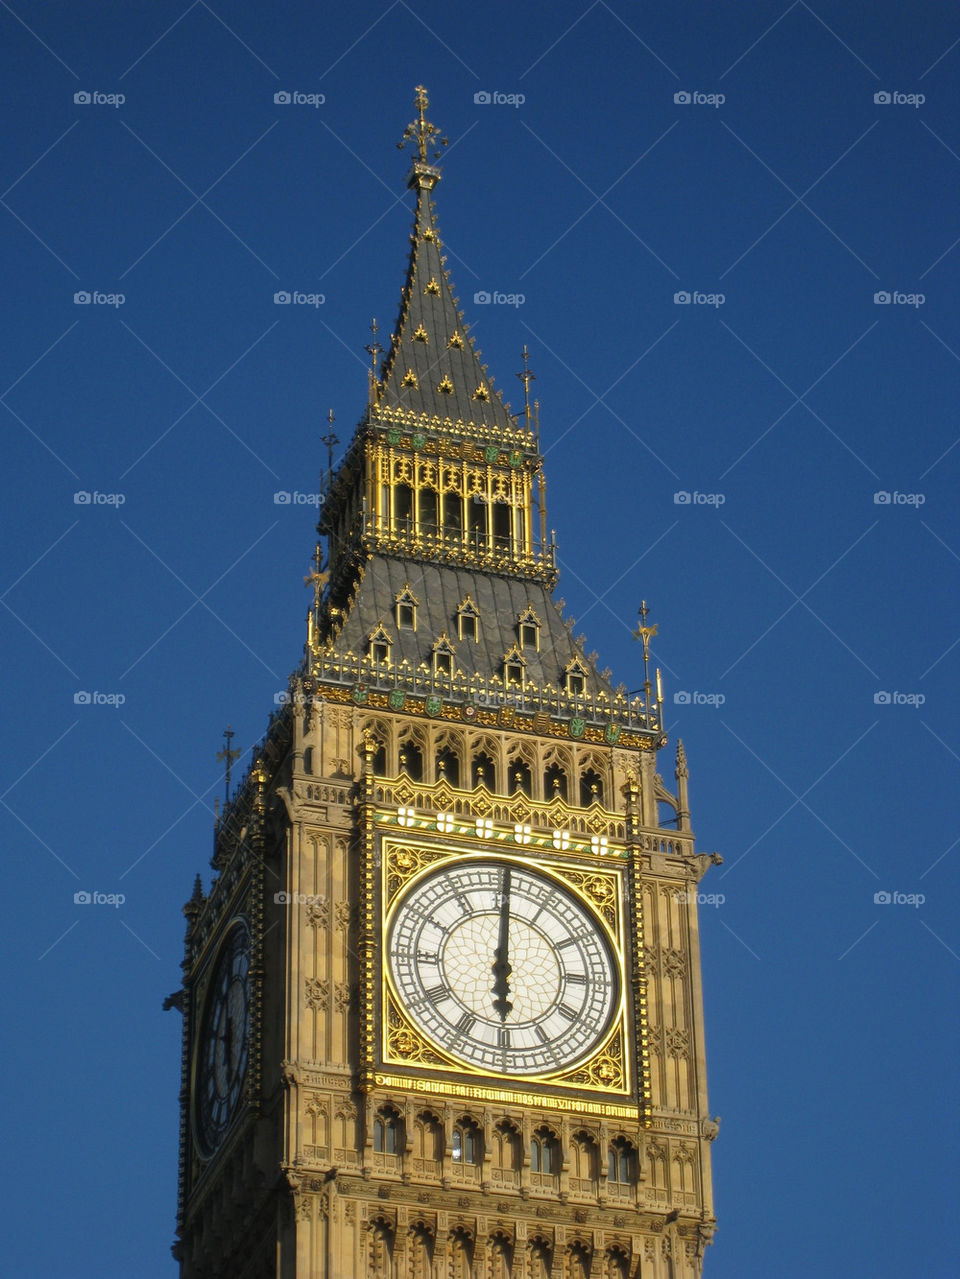 london england clock westminster by amkrak